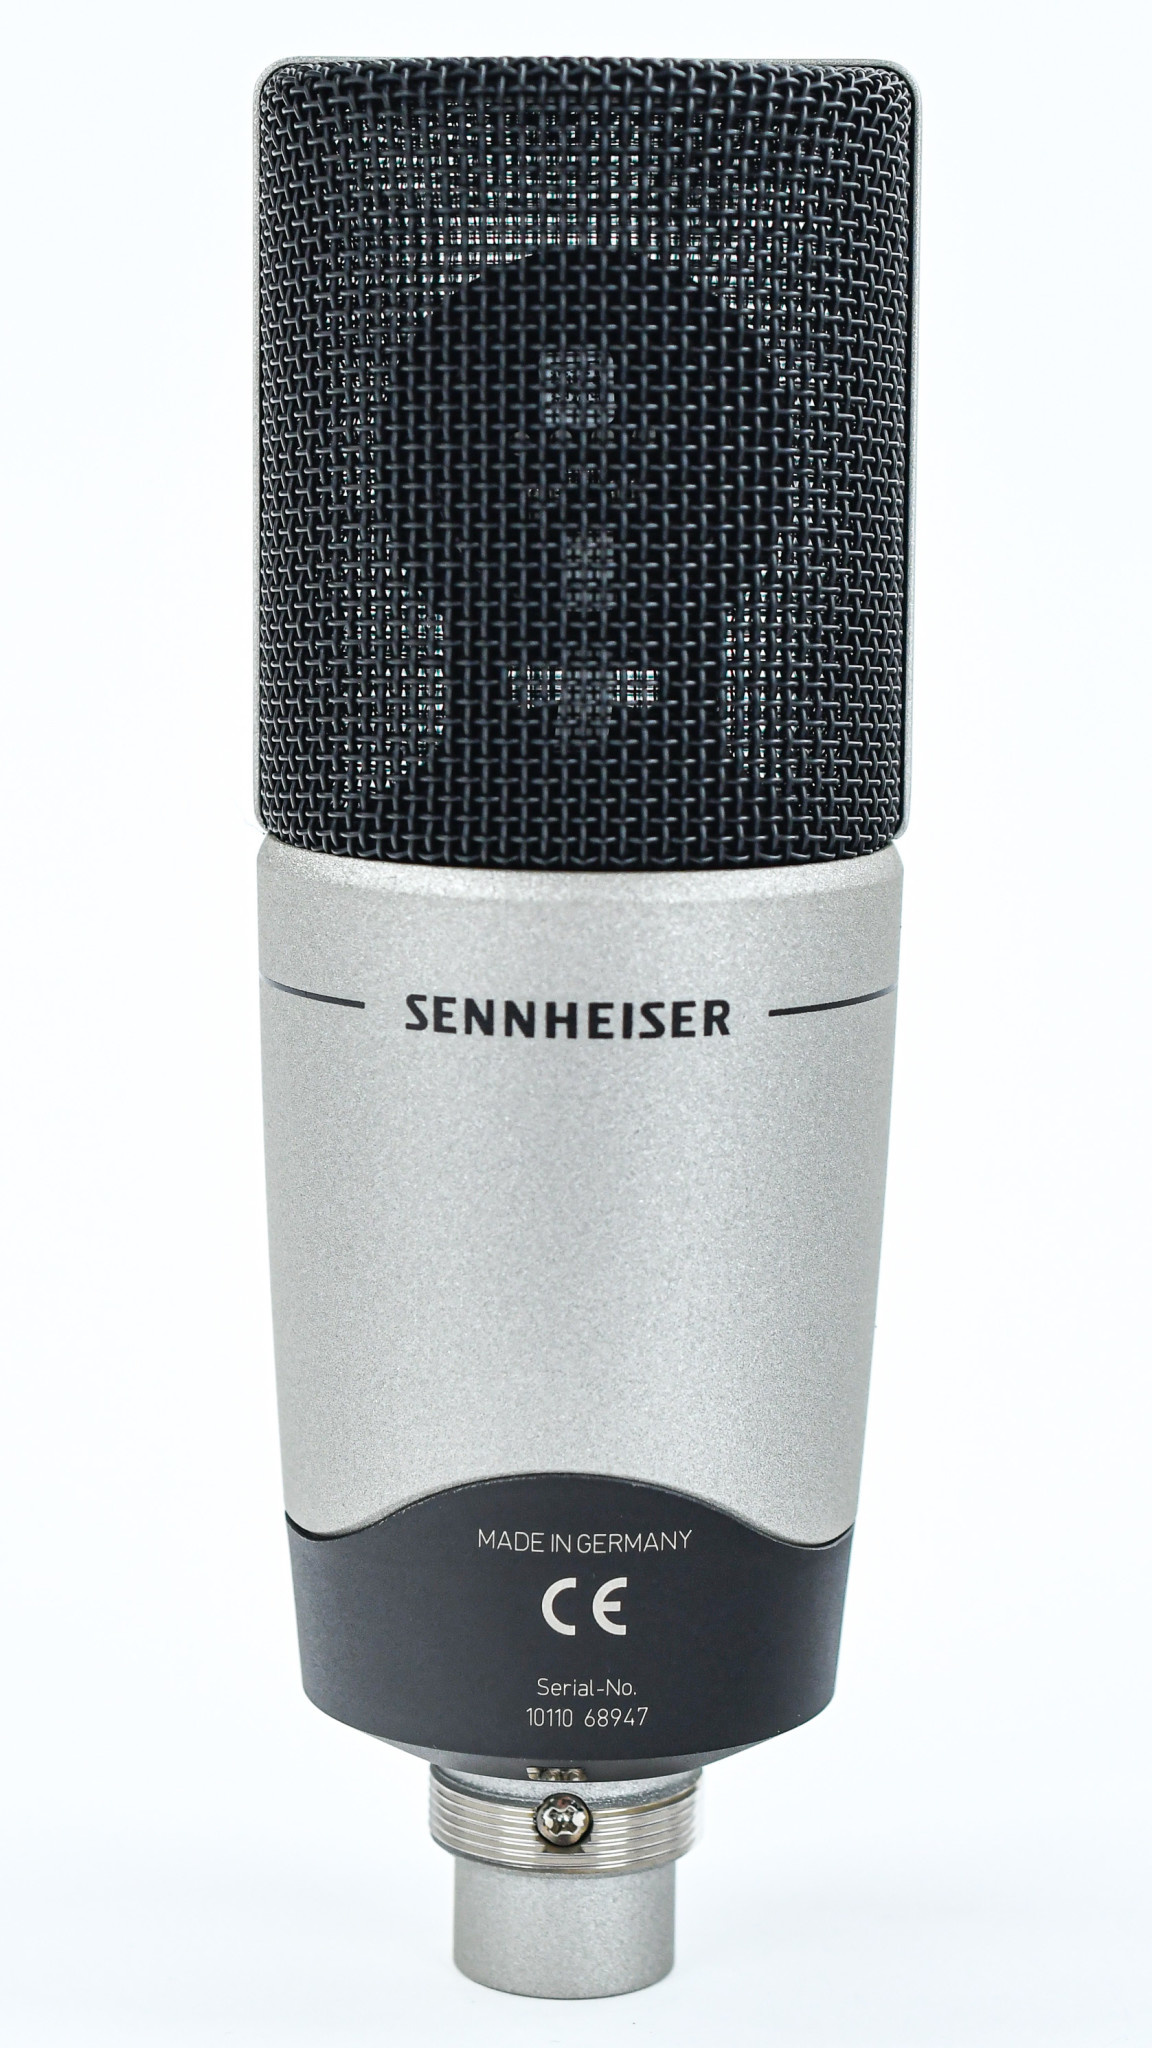 Sennheiser MK4 Studio Condensator Microphone